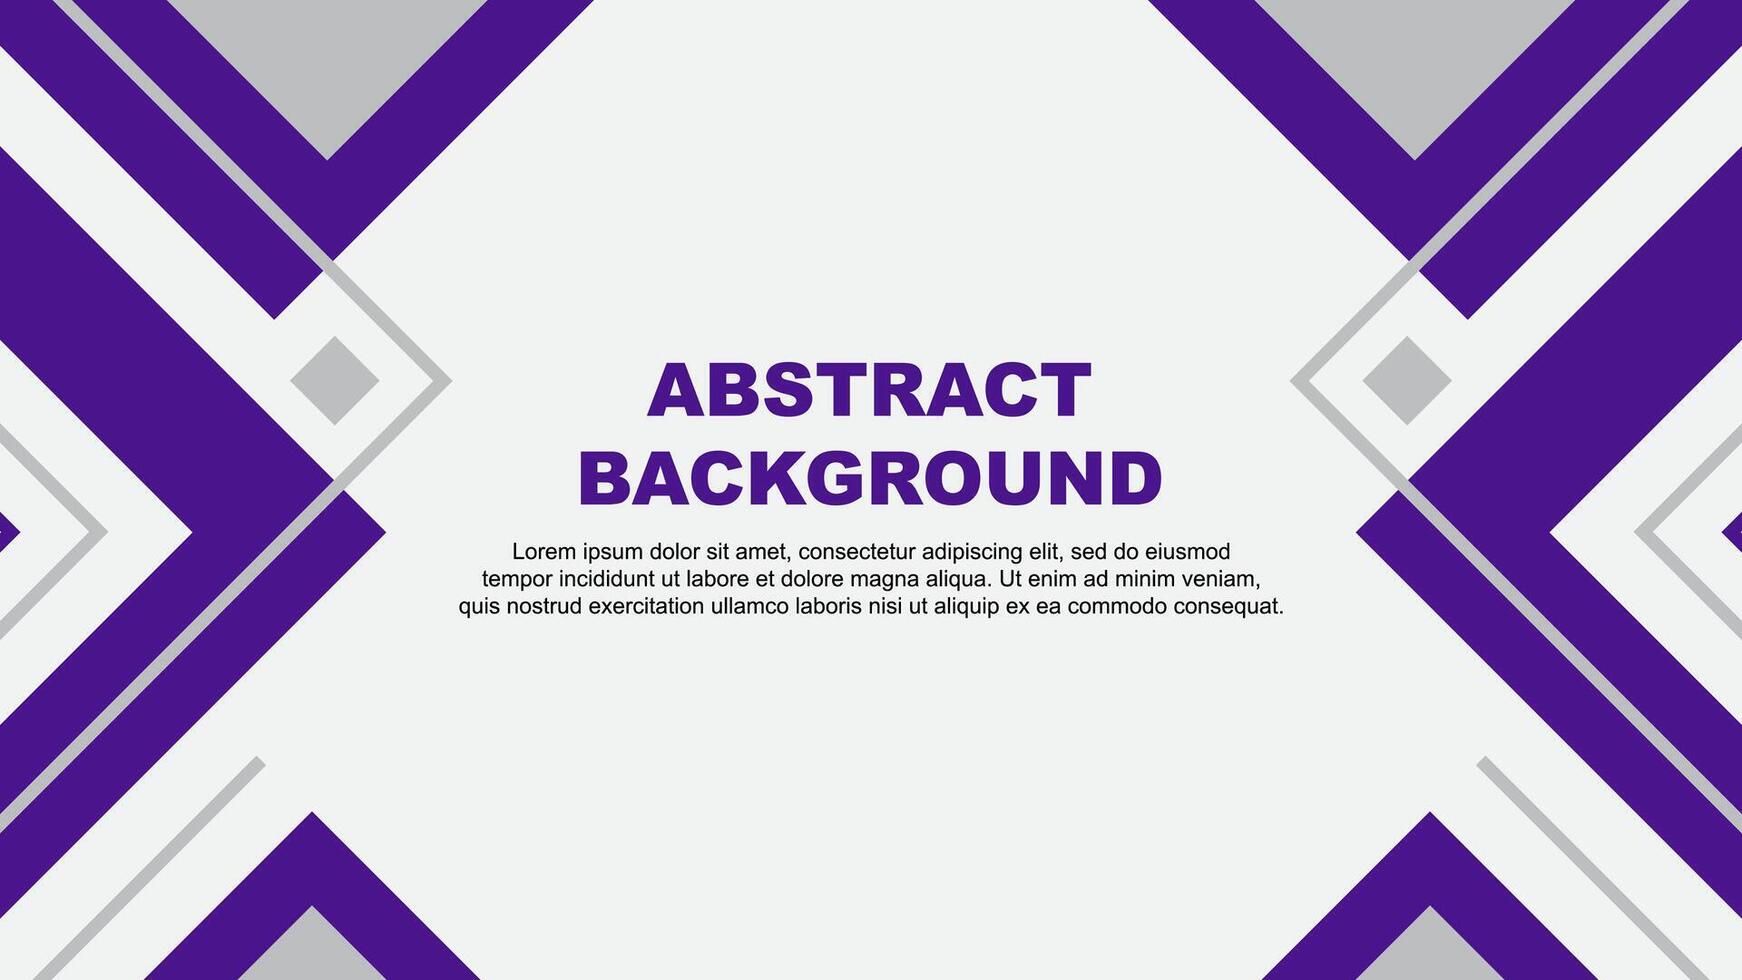 Abstract Purple Background Design Template. Banner Wallpaper Vector Illustration. Purple Illustration